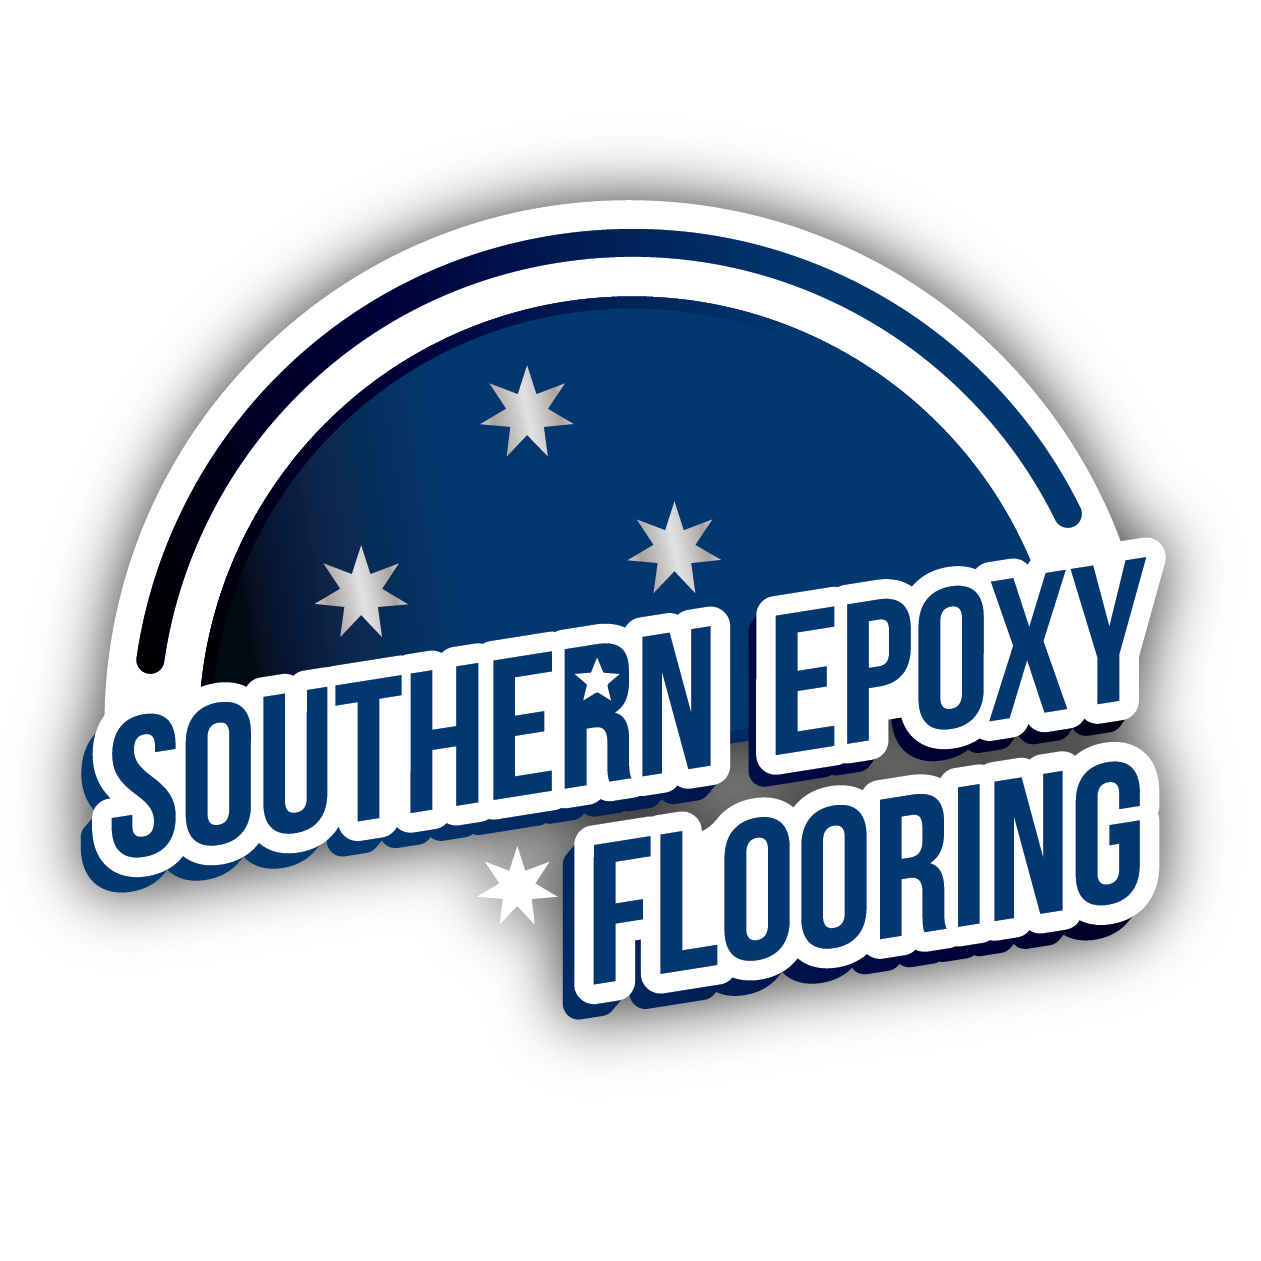 Southern Epoxy Flooring